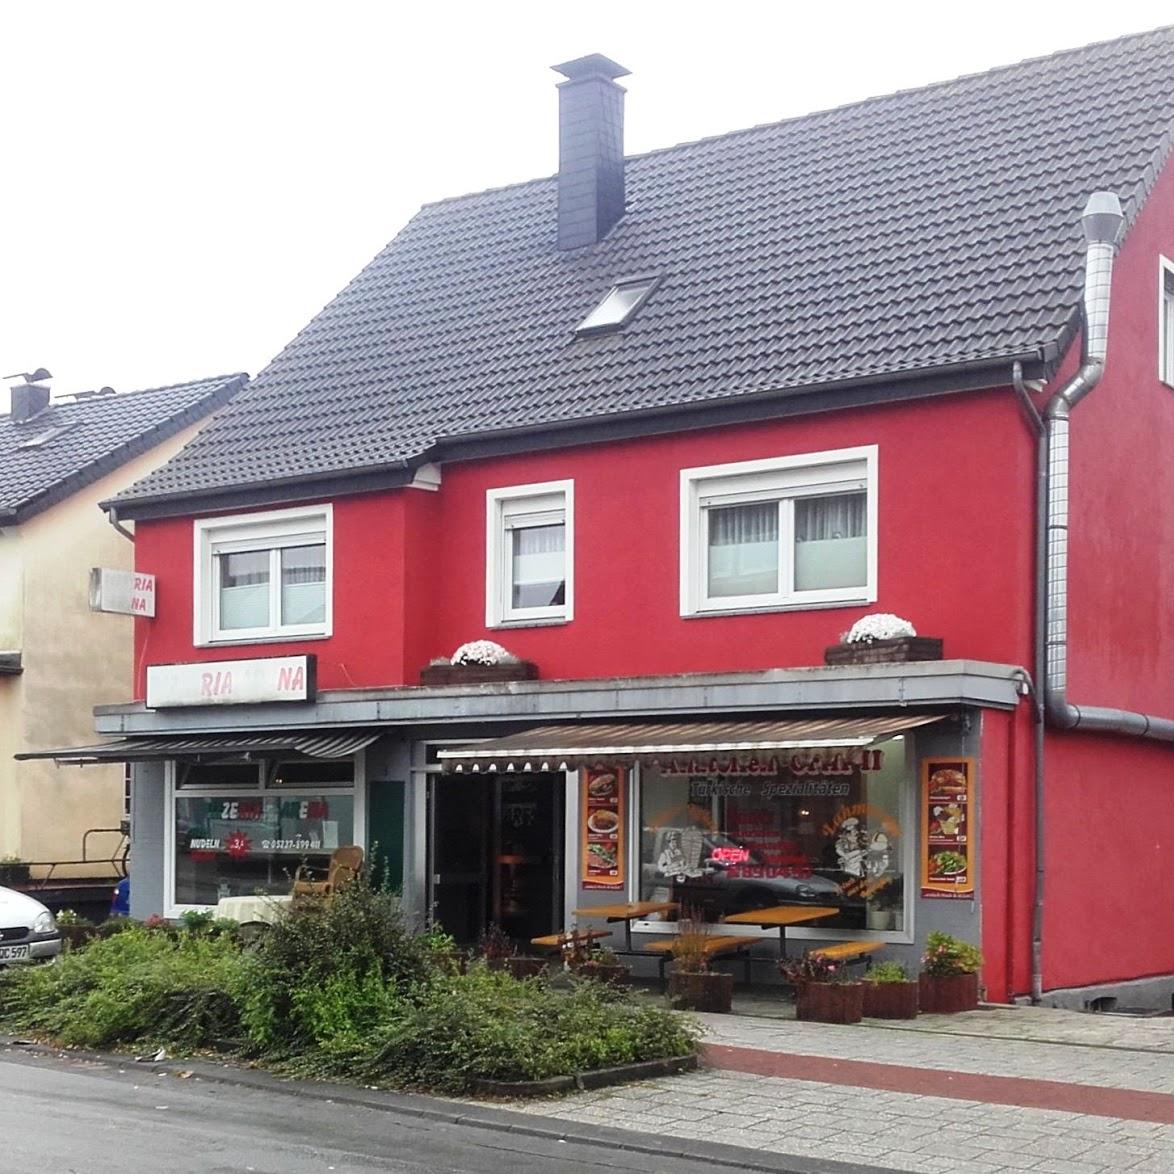 Restaurant "Anatoliengrill" in Augustdorf